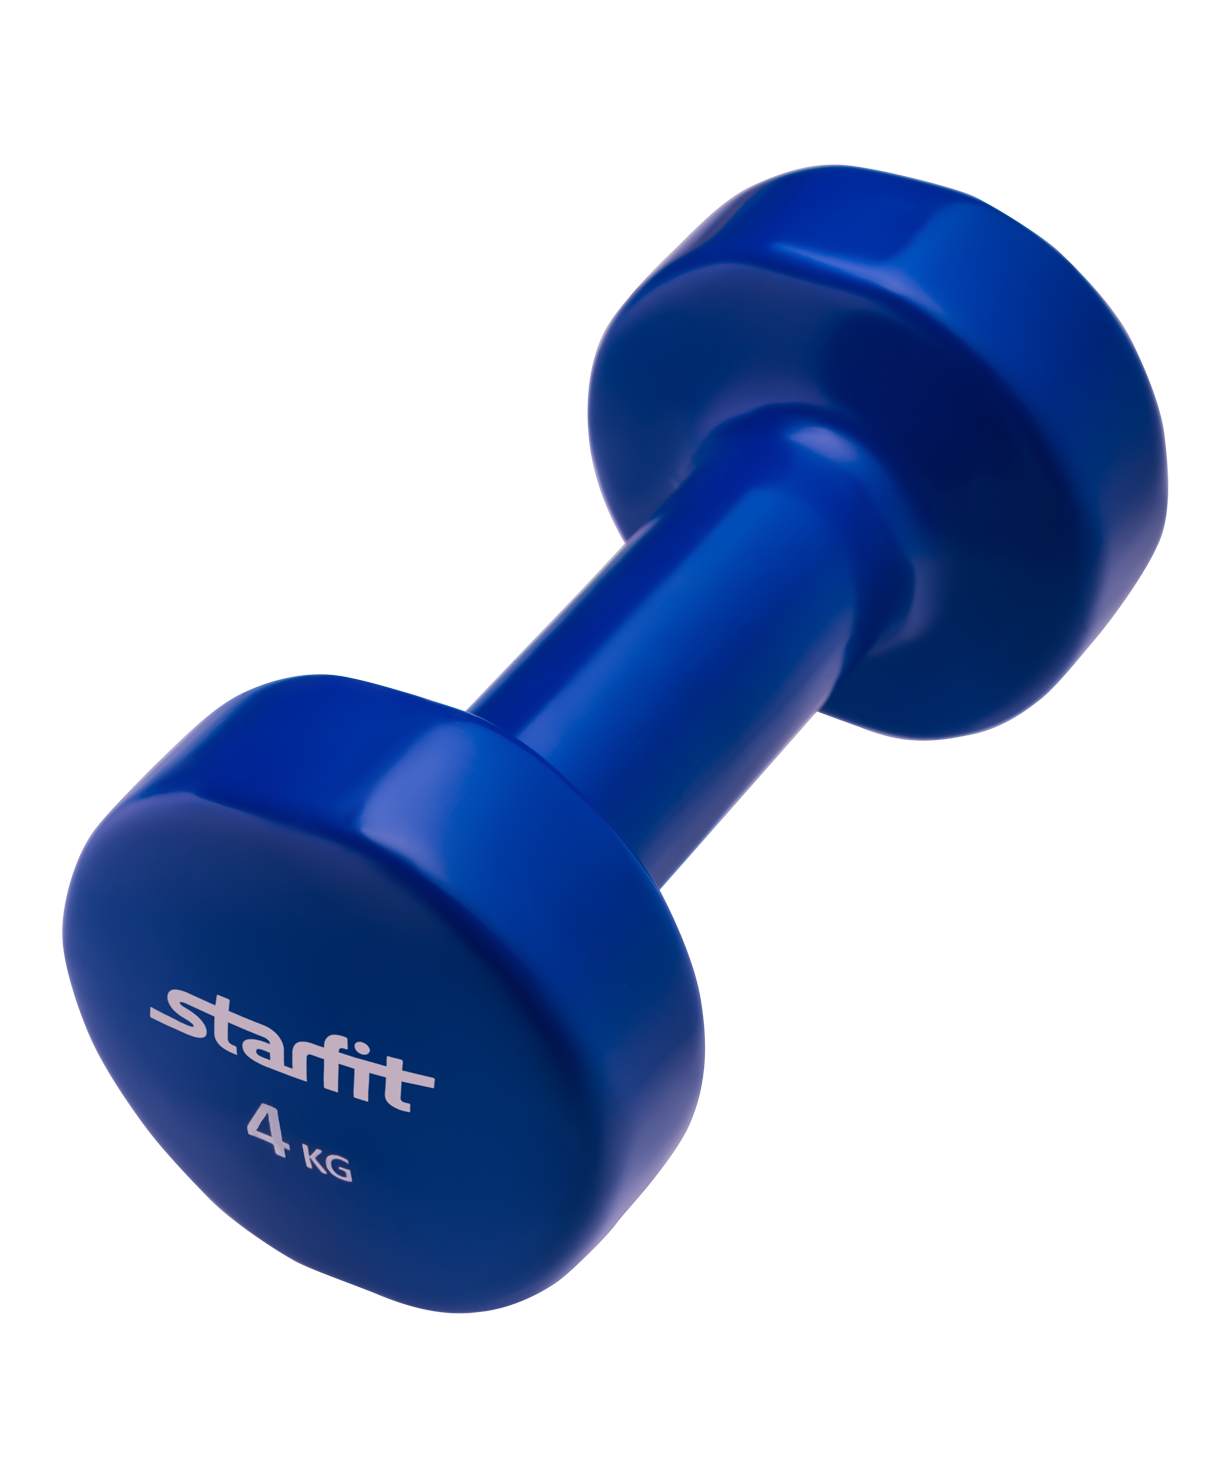 Гантель виниловая StarFit DB-101 4 кг, темно-синяя